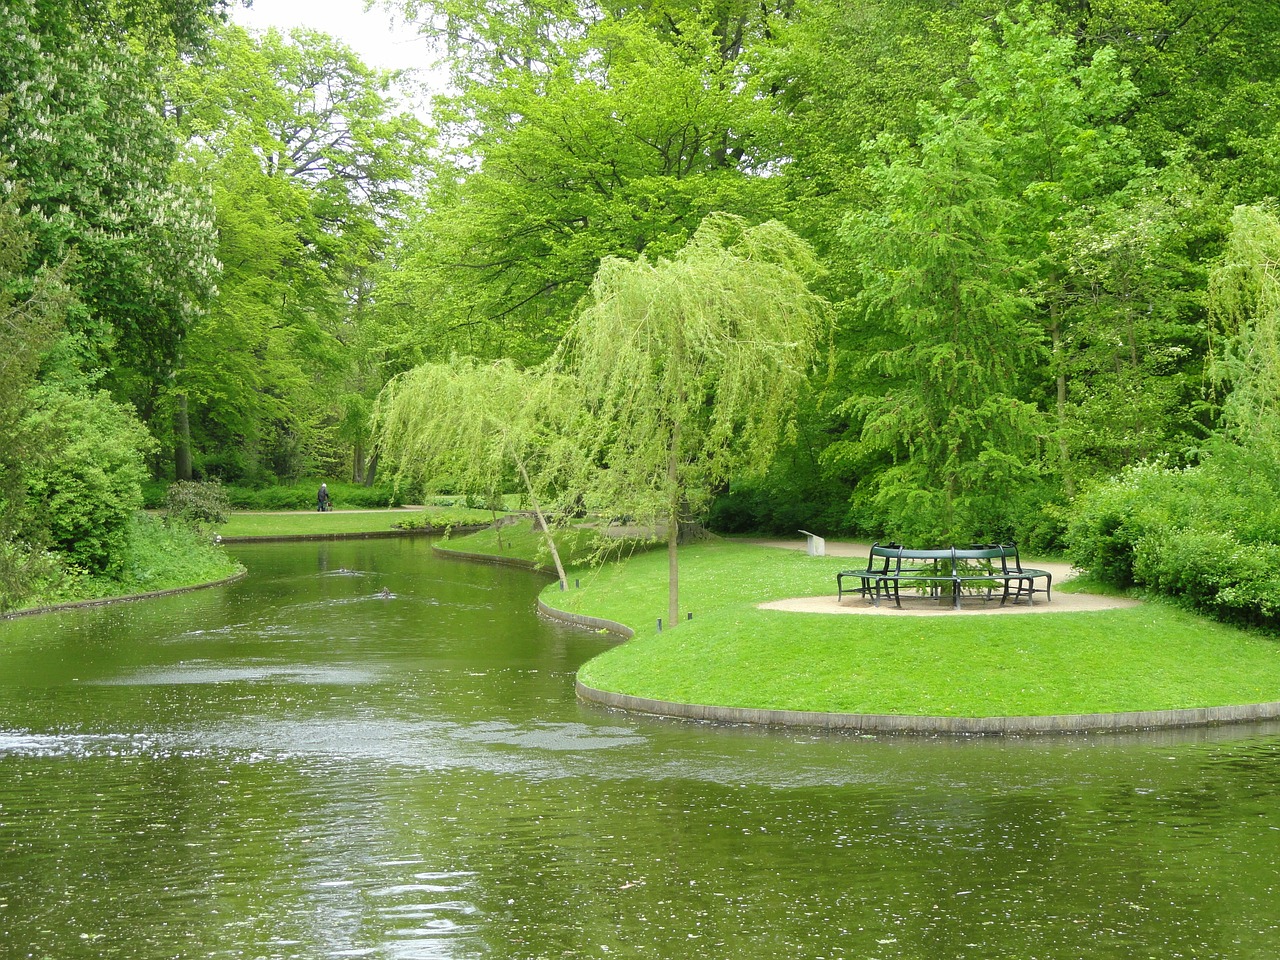 Download free photo of Copenhagen,denmark,park,grass,shrubs - from ...